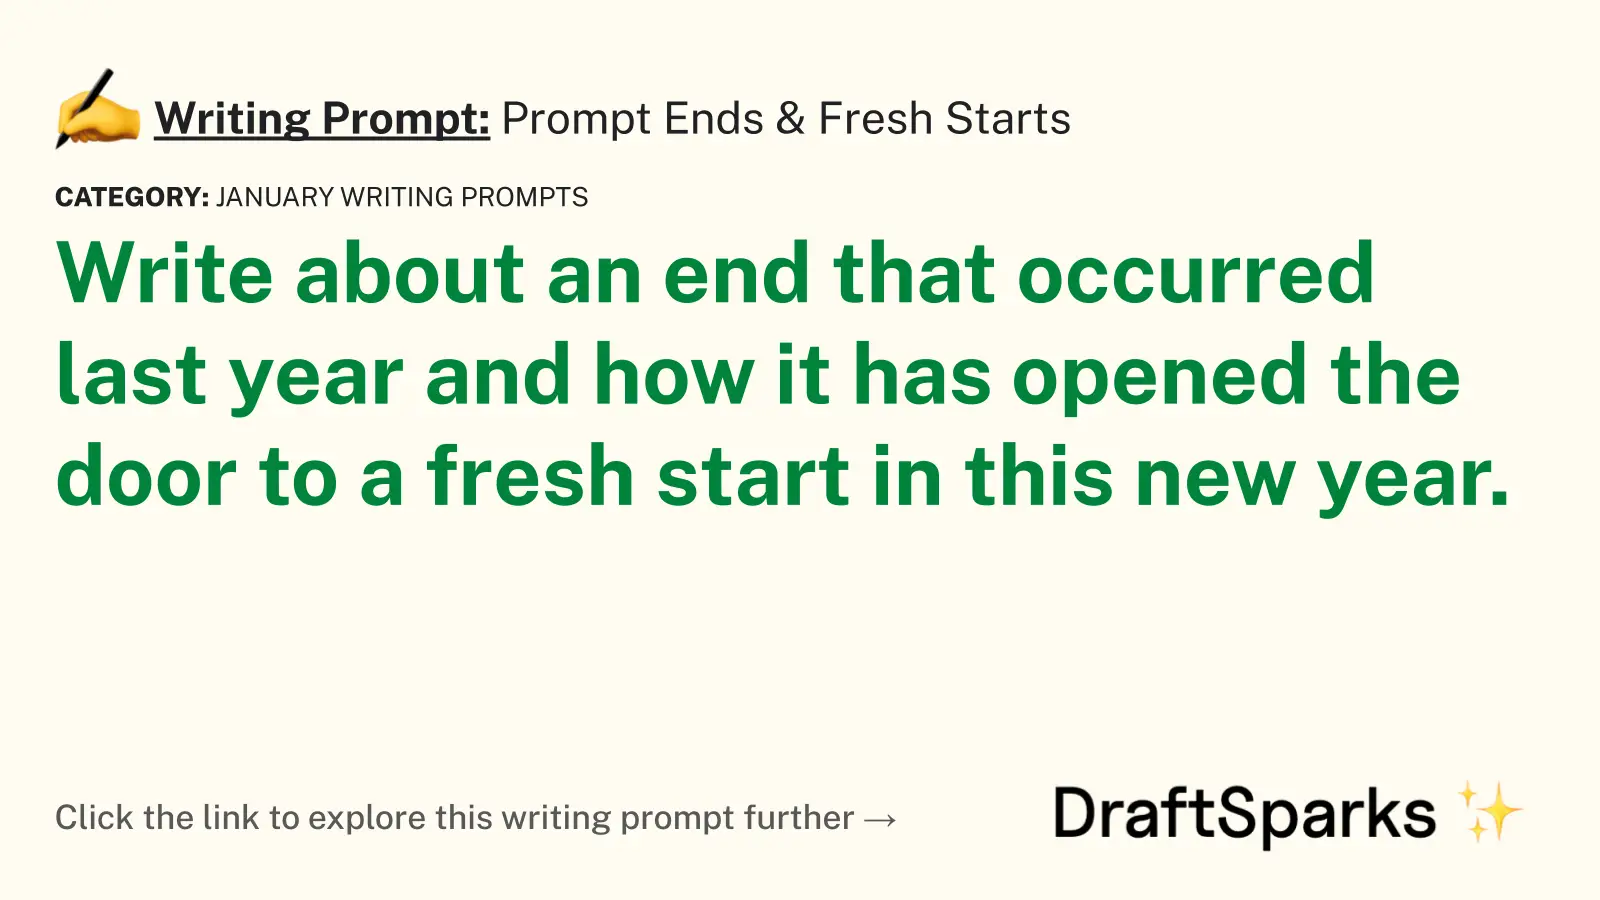 Prompt Ends & Fresh Starts